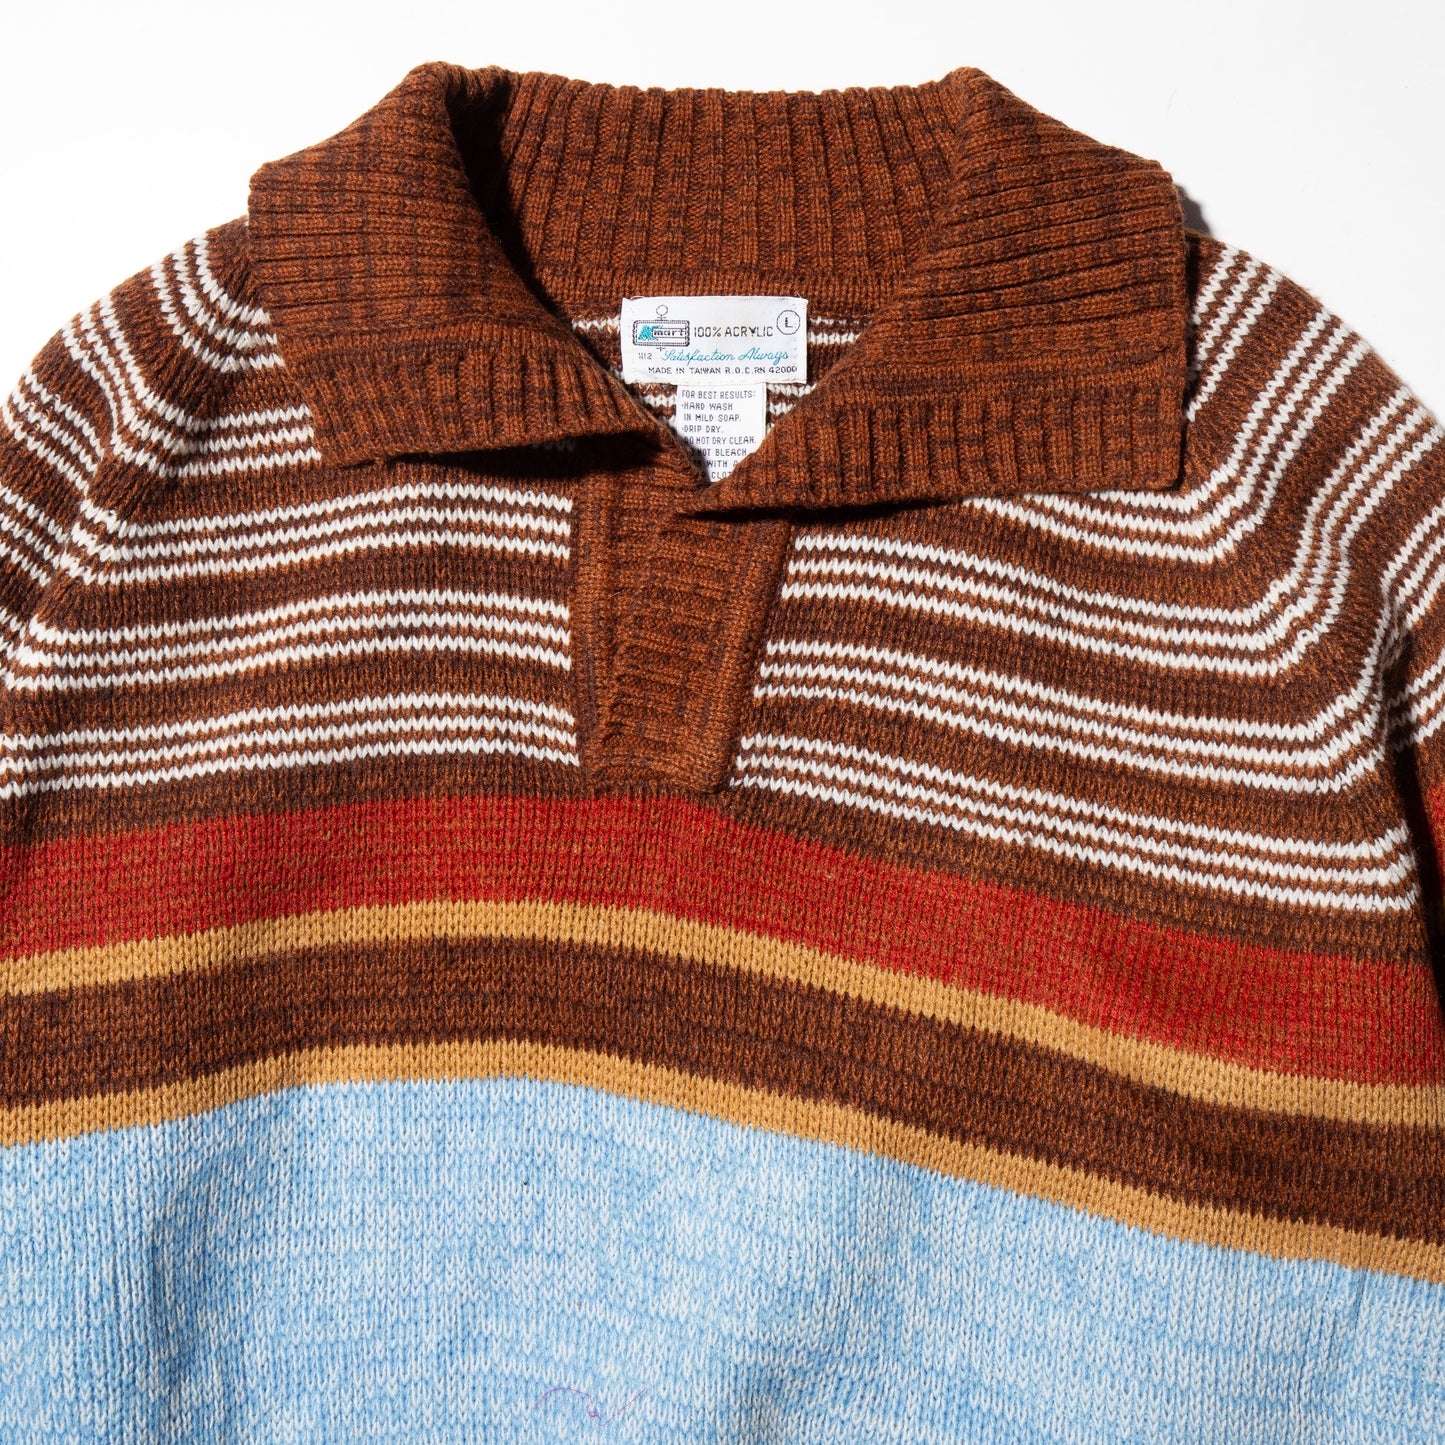 vintage sears border polo sweater